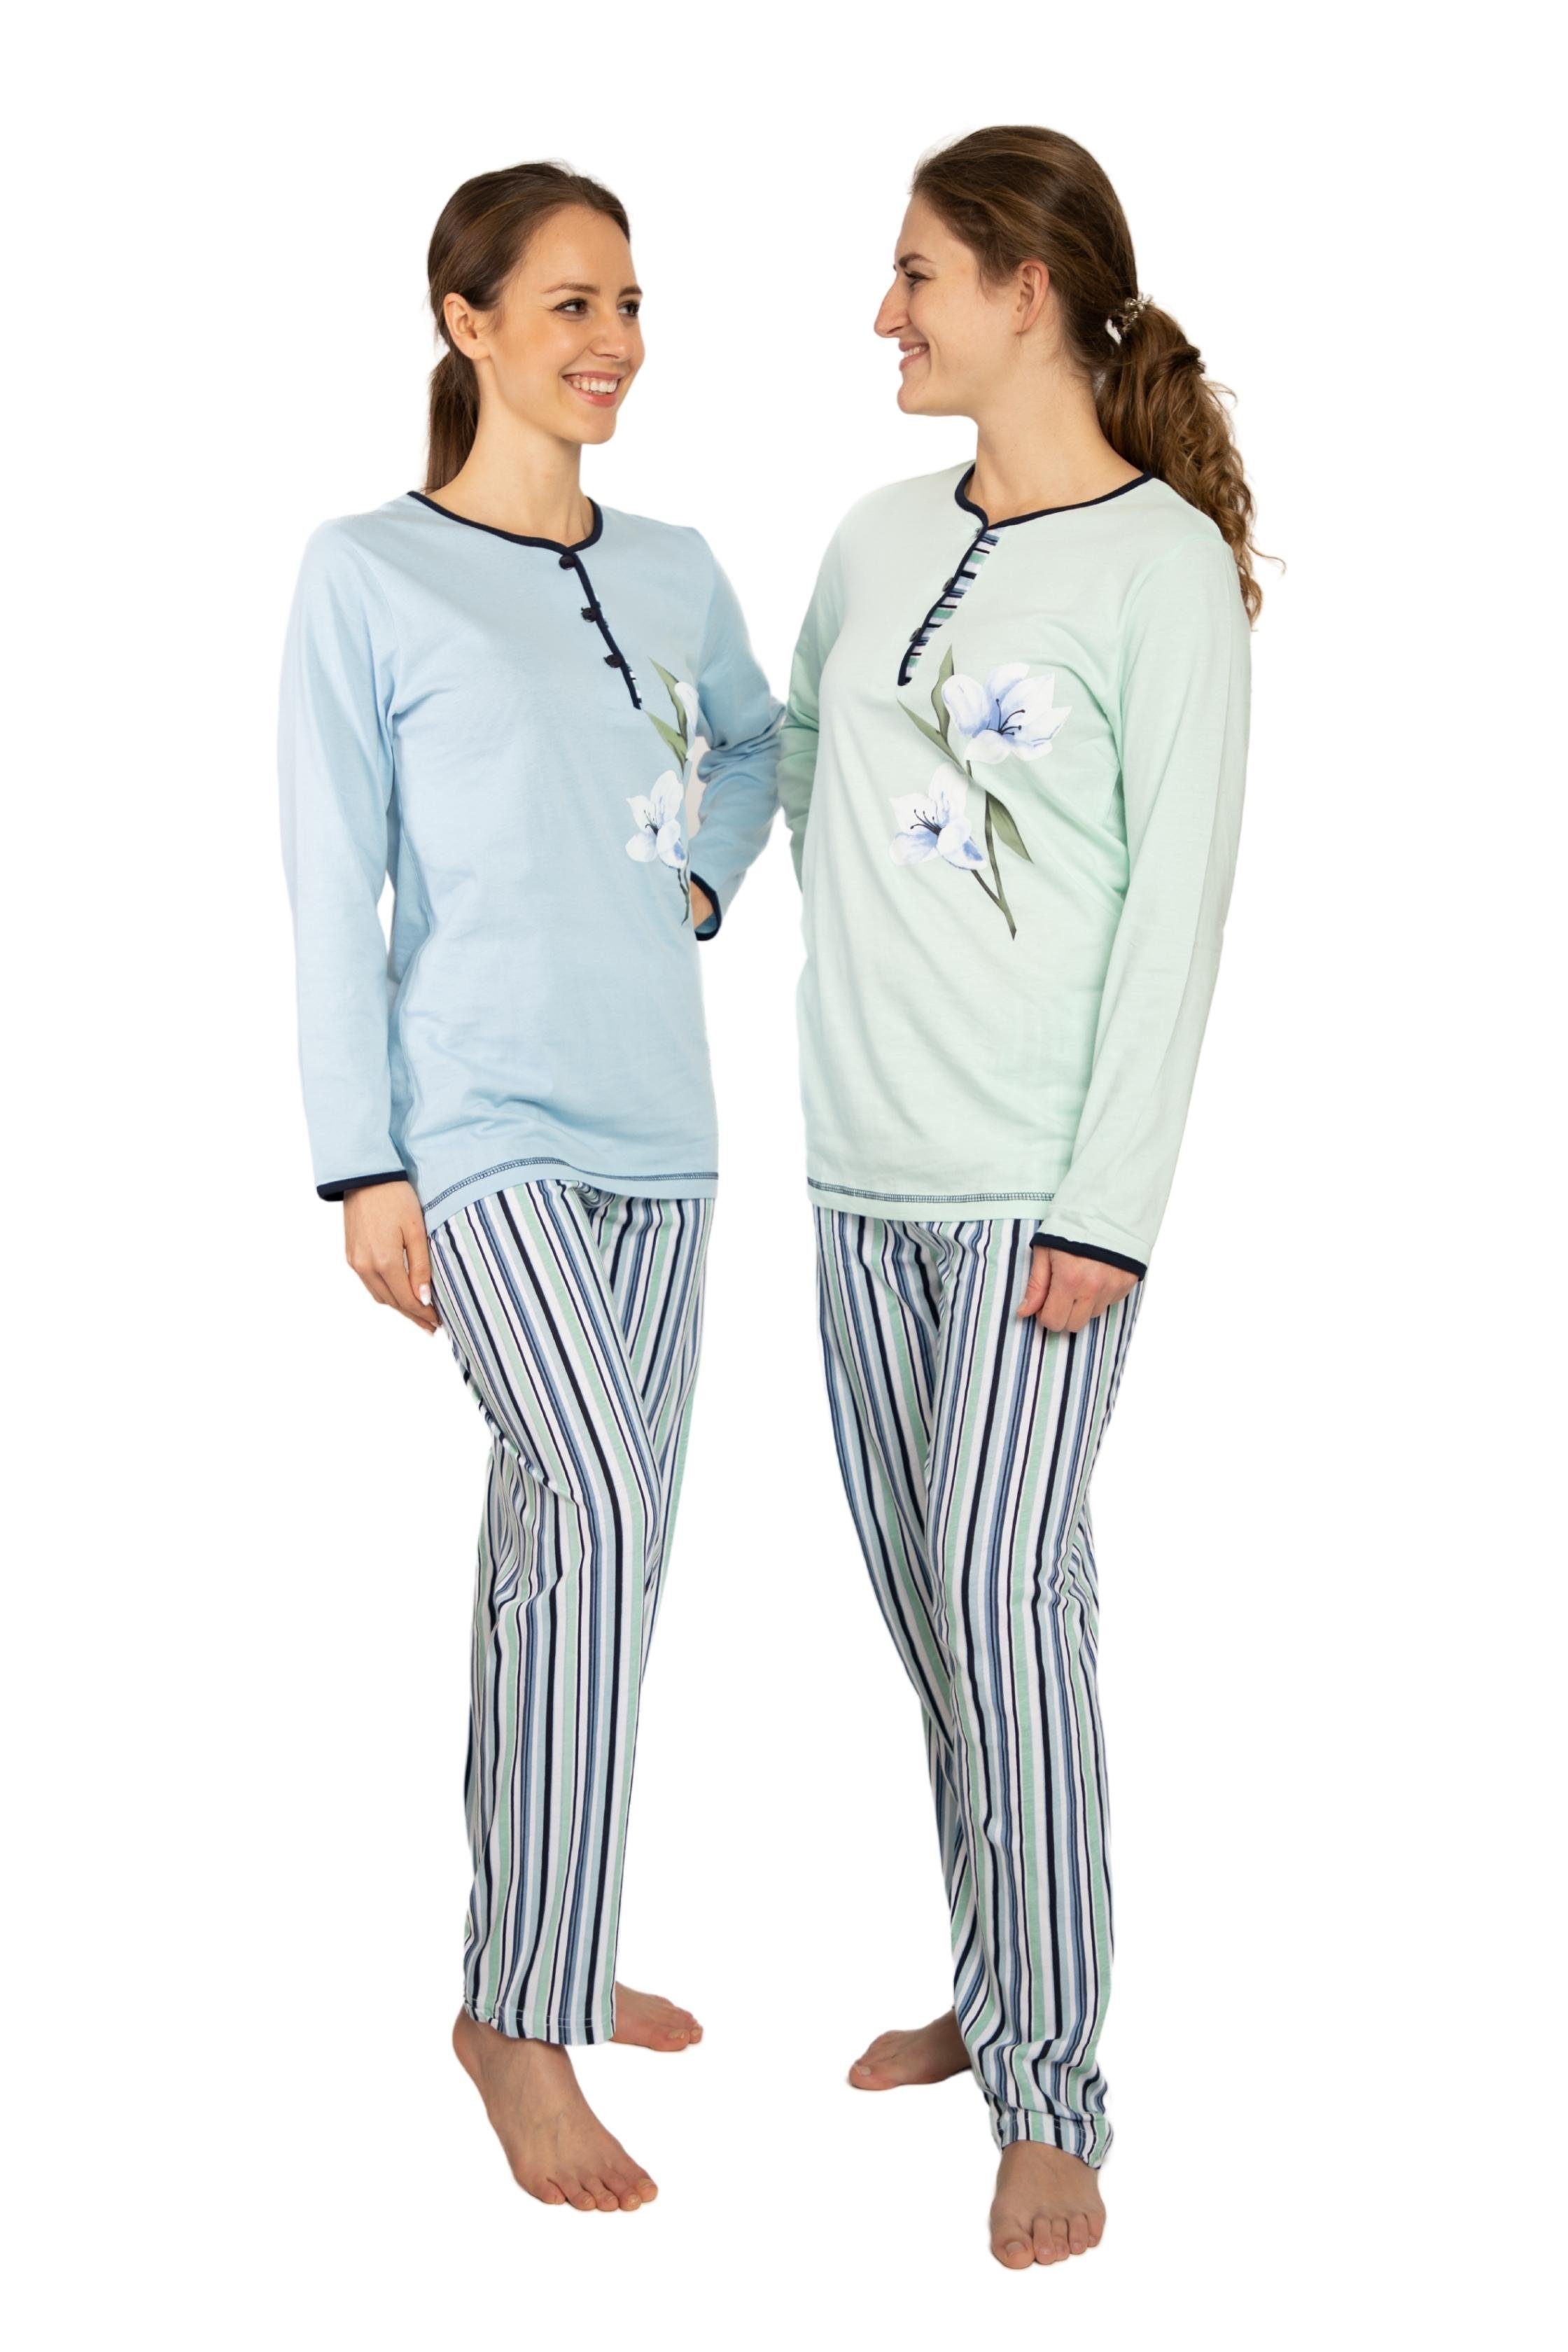 Consult-Tex Pyjama Damen Schlafanzug, Pyjama, Homewear-Set im 3er Pack  DW739 (3 Stück Packung, 3 Stück) Streifenmuster | Pyjama-Sets